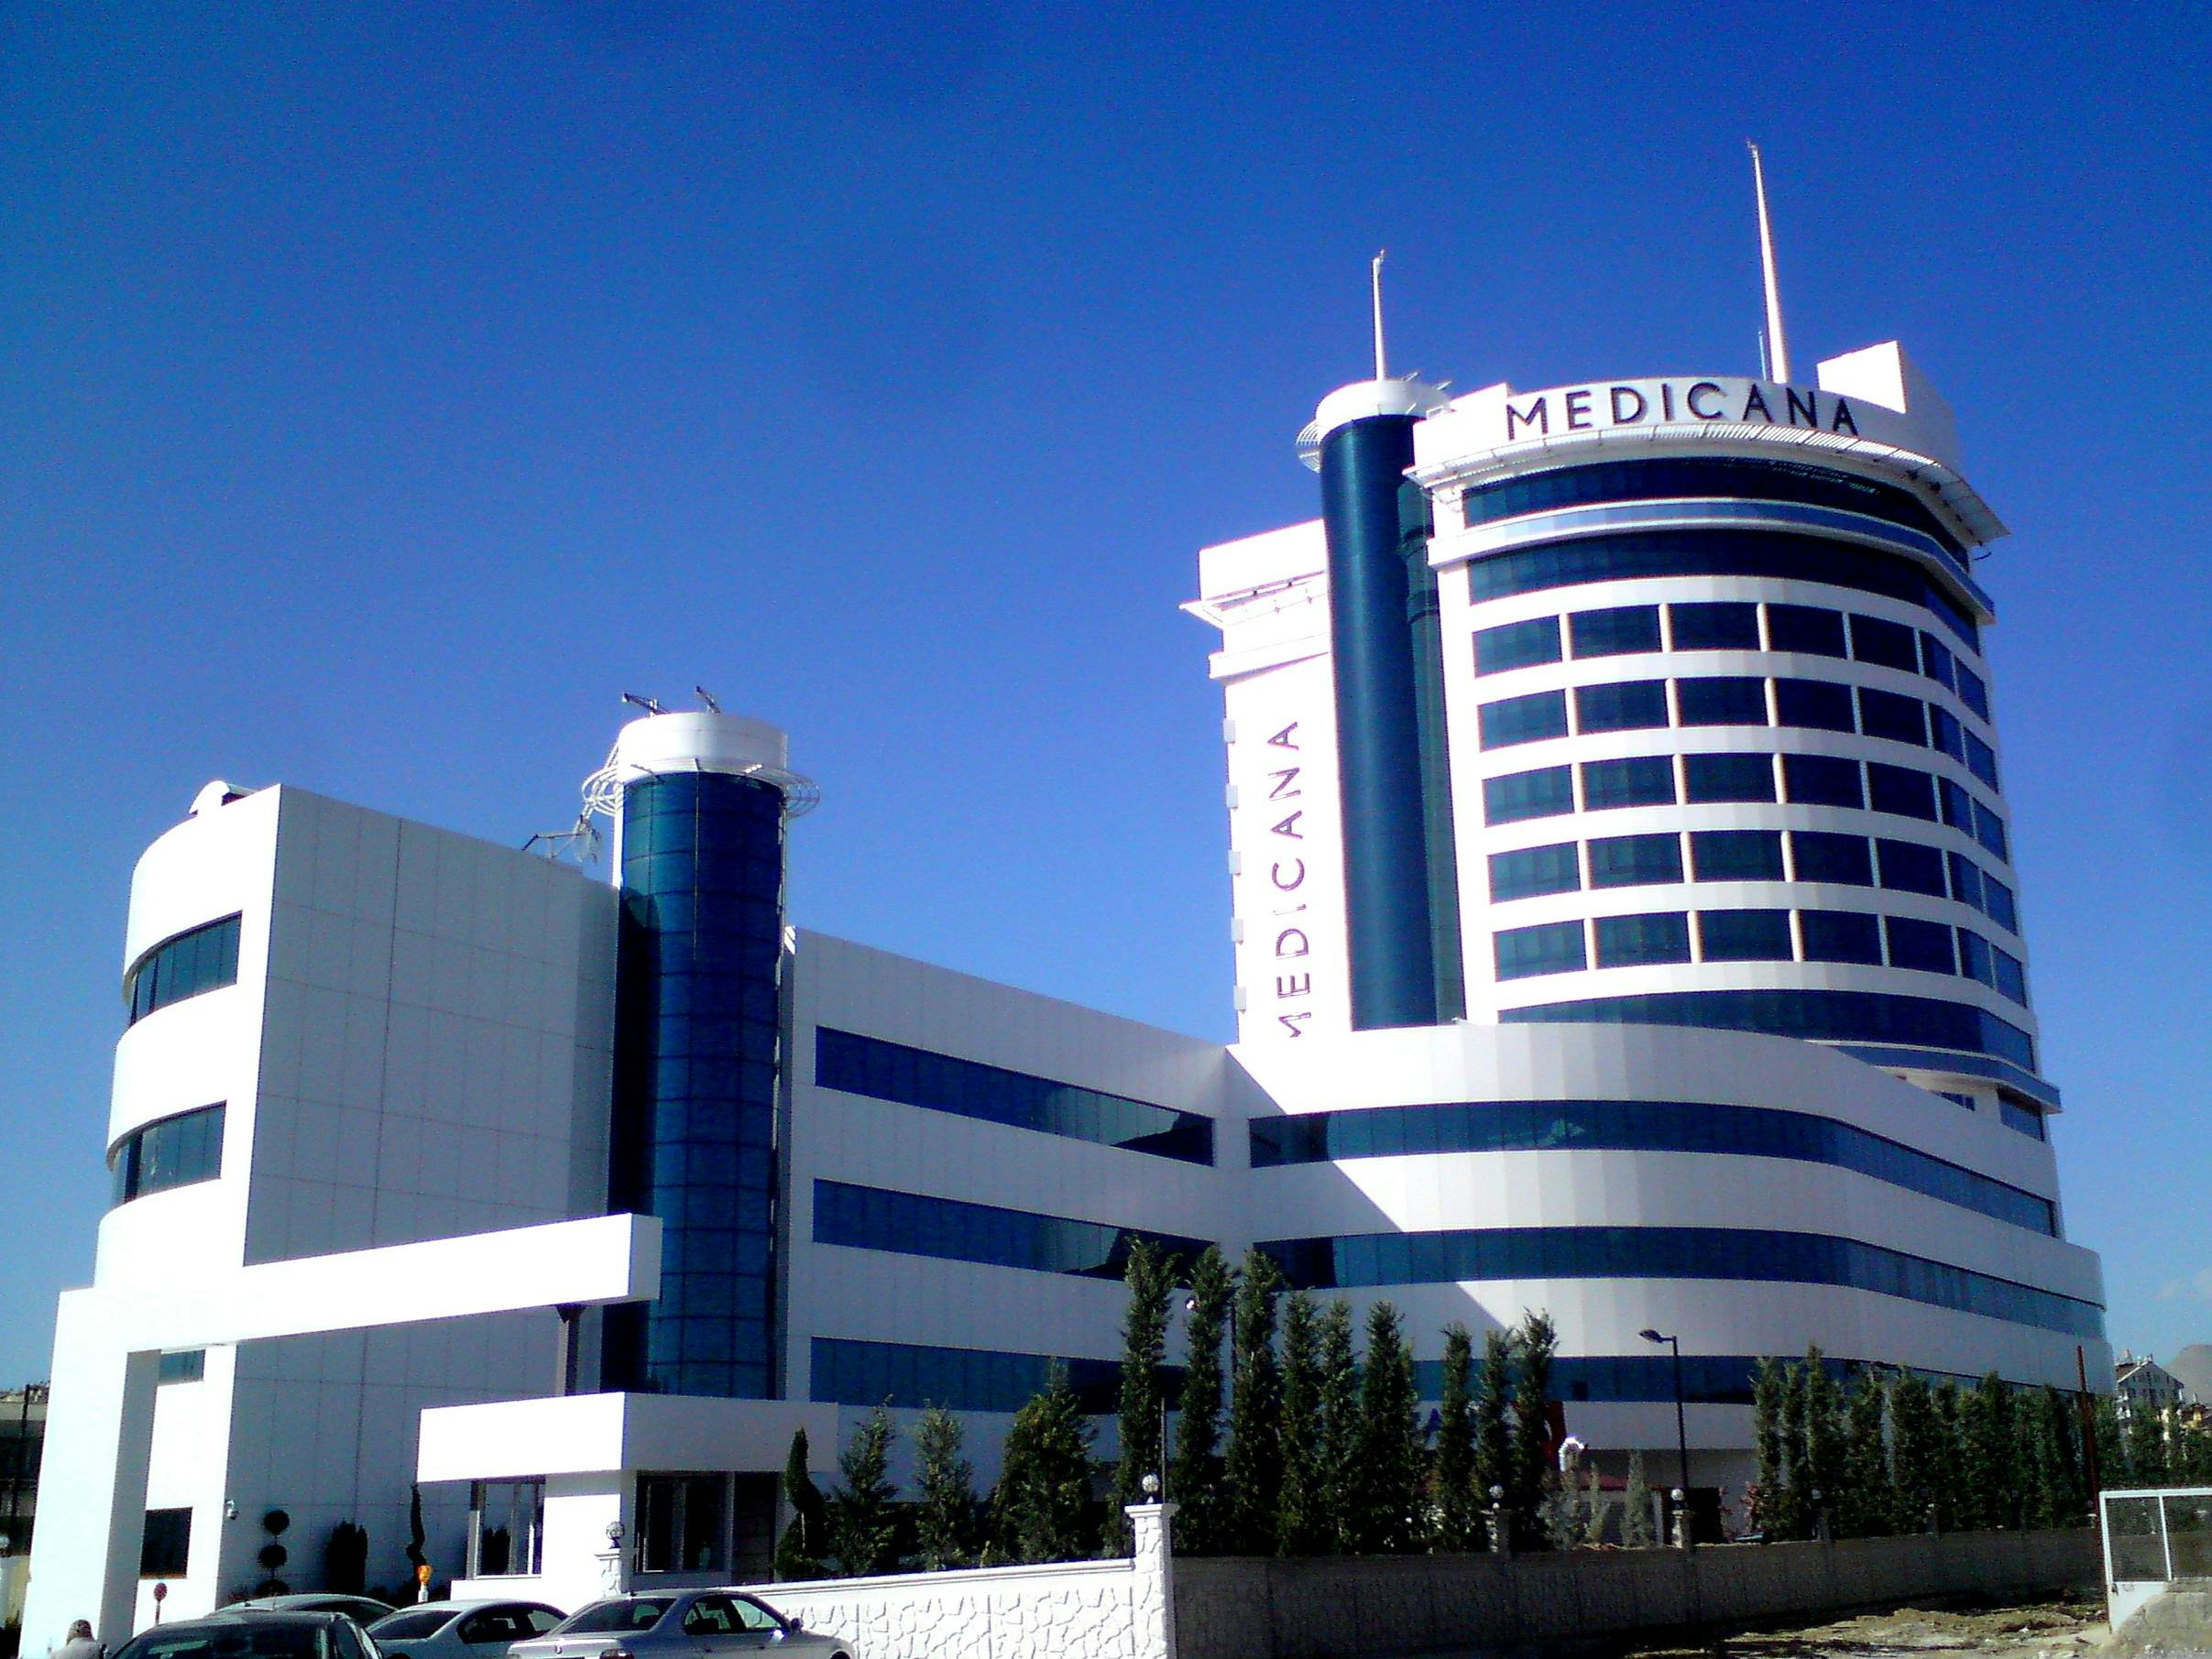 Medicana Konya hospital